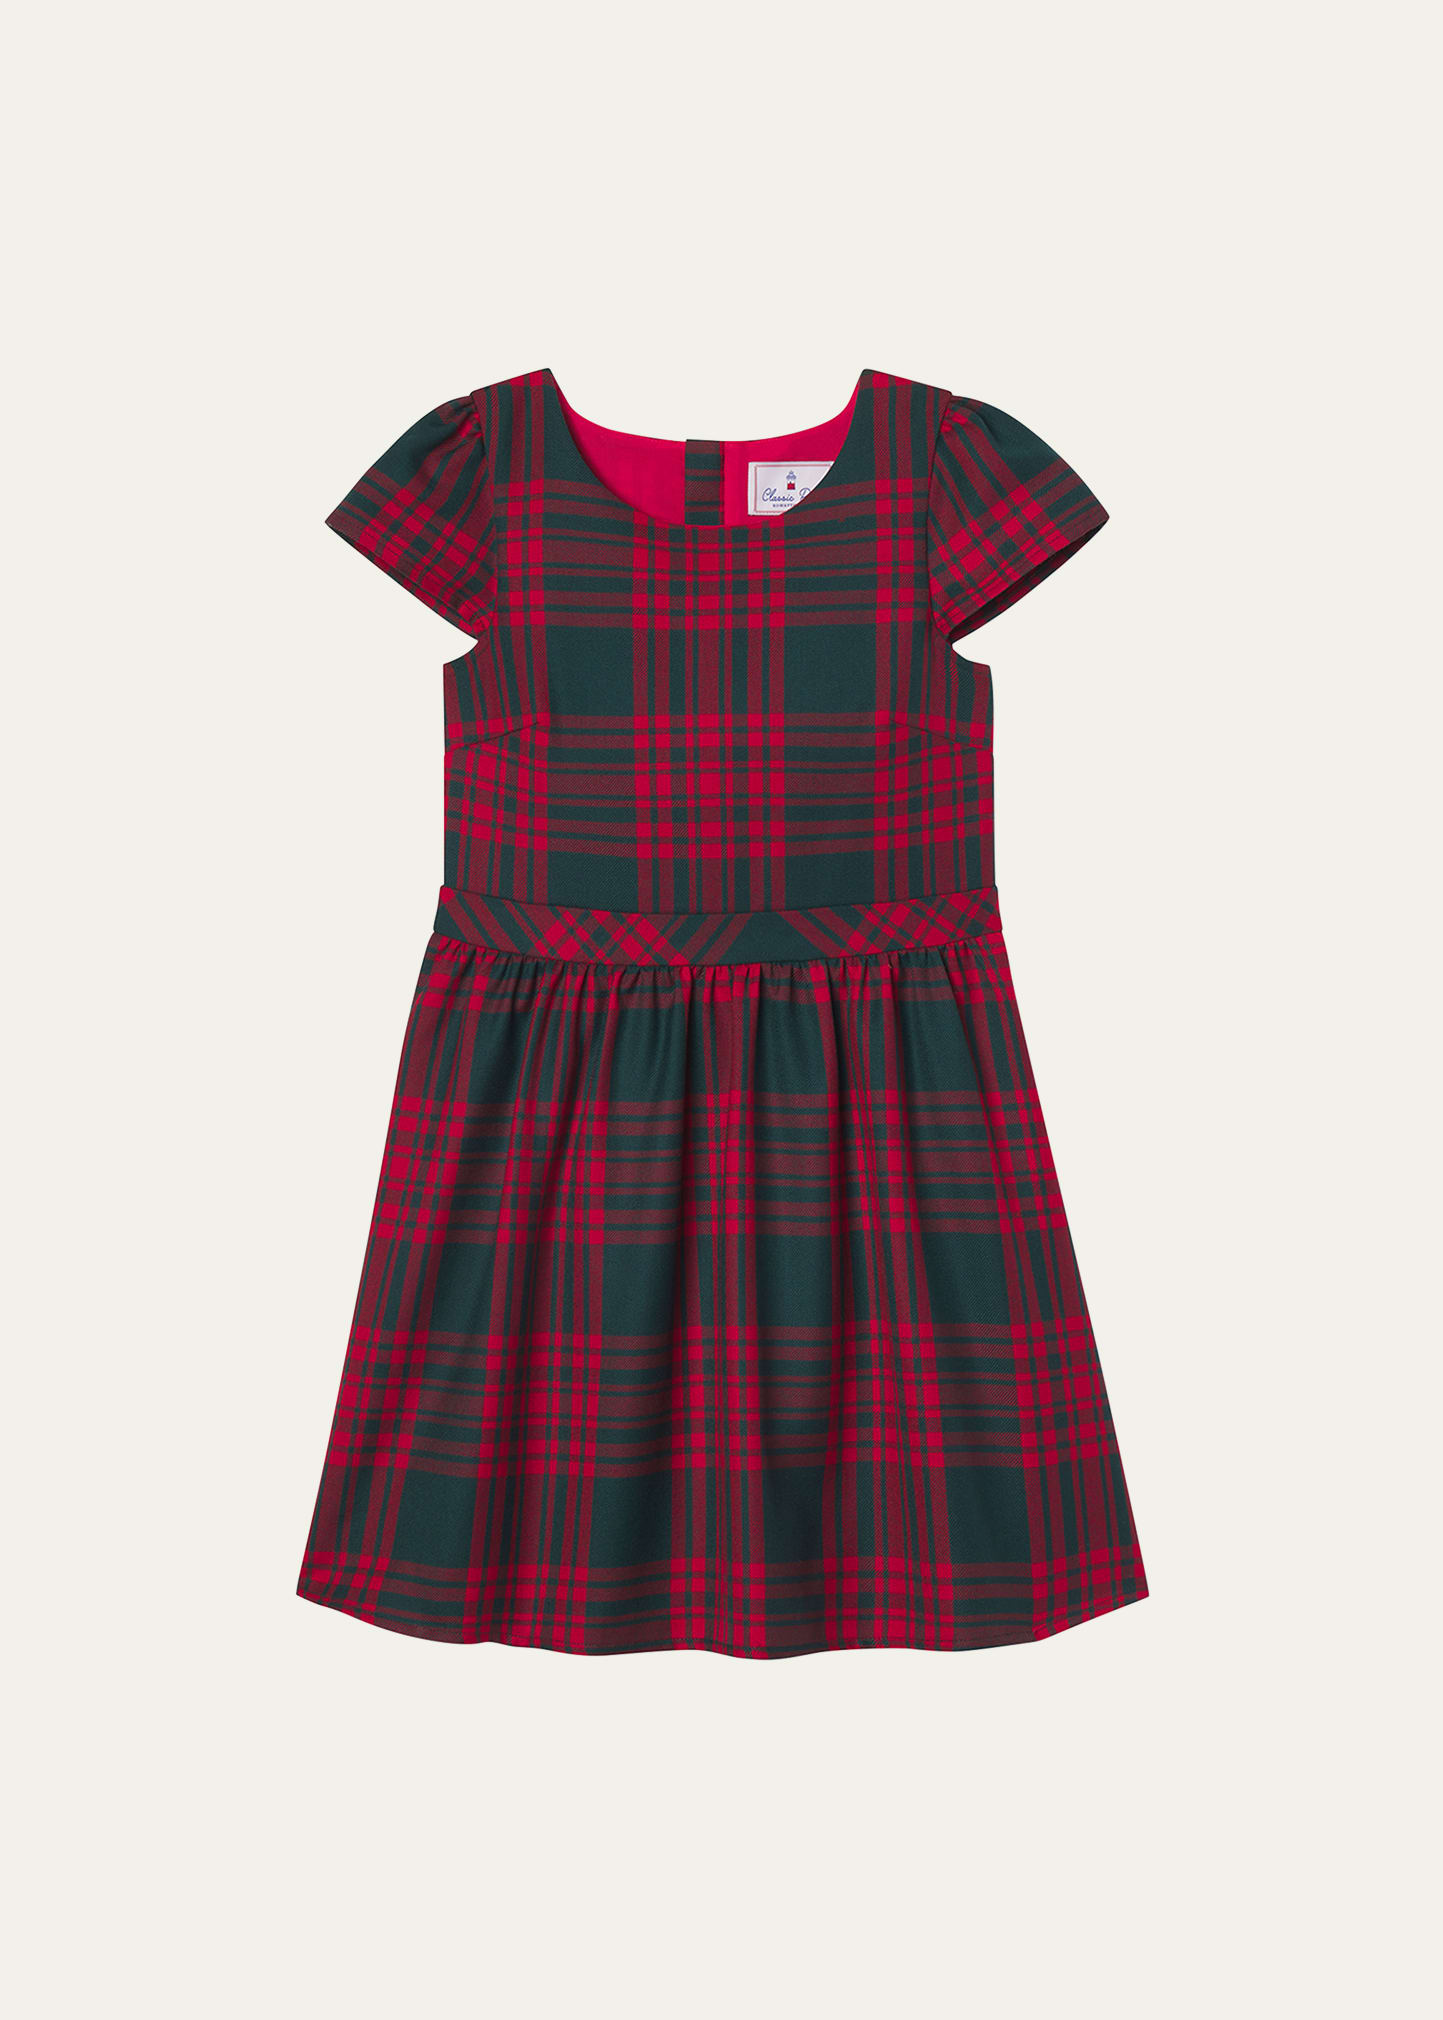 Girl's Tilly Tartan Holiday Dress, Size 5-14